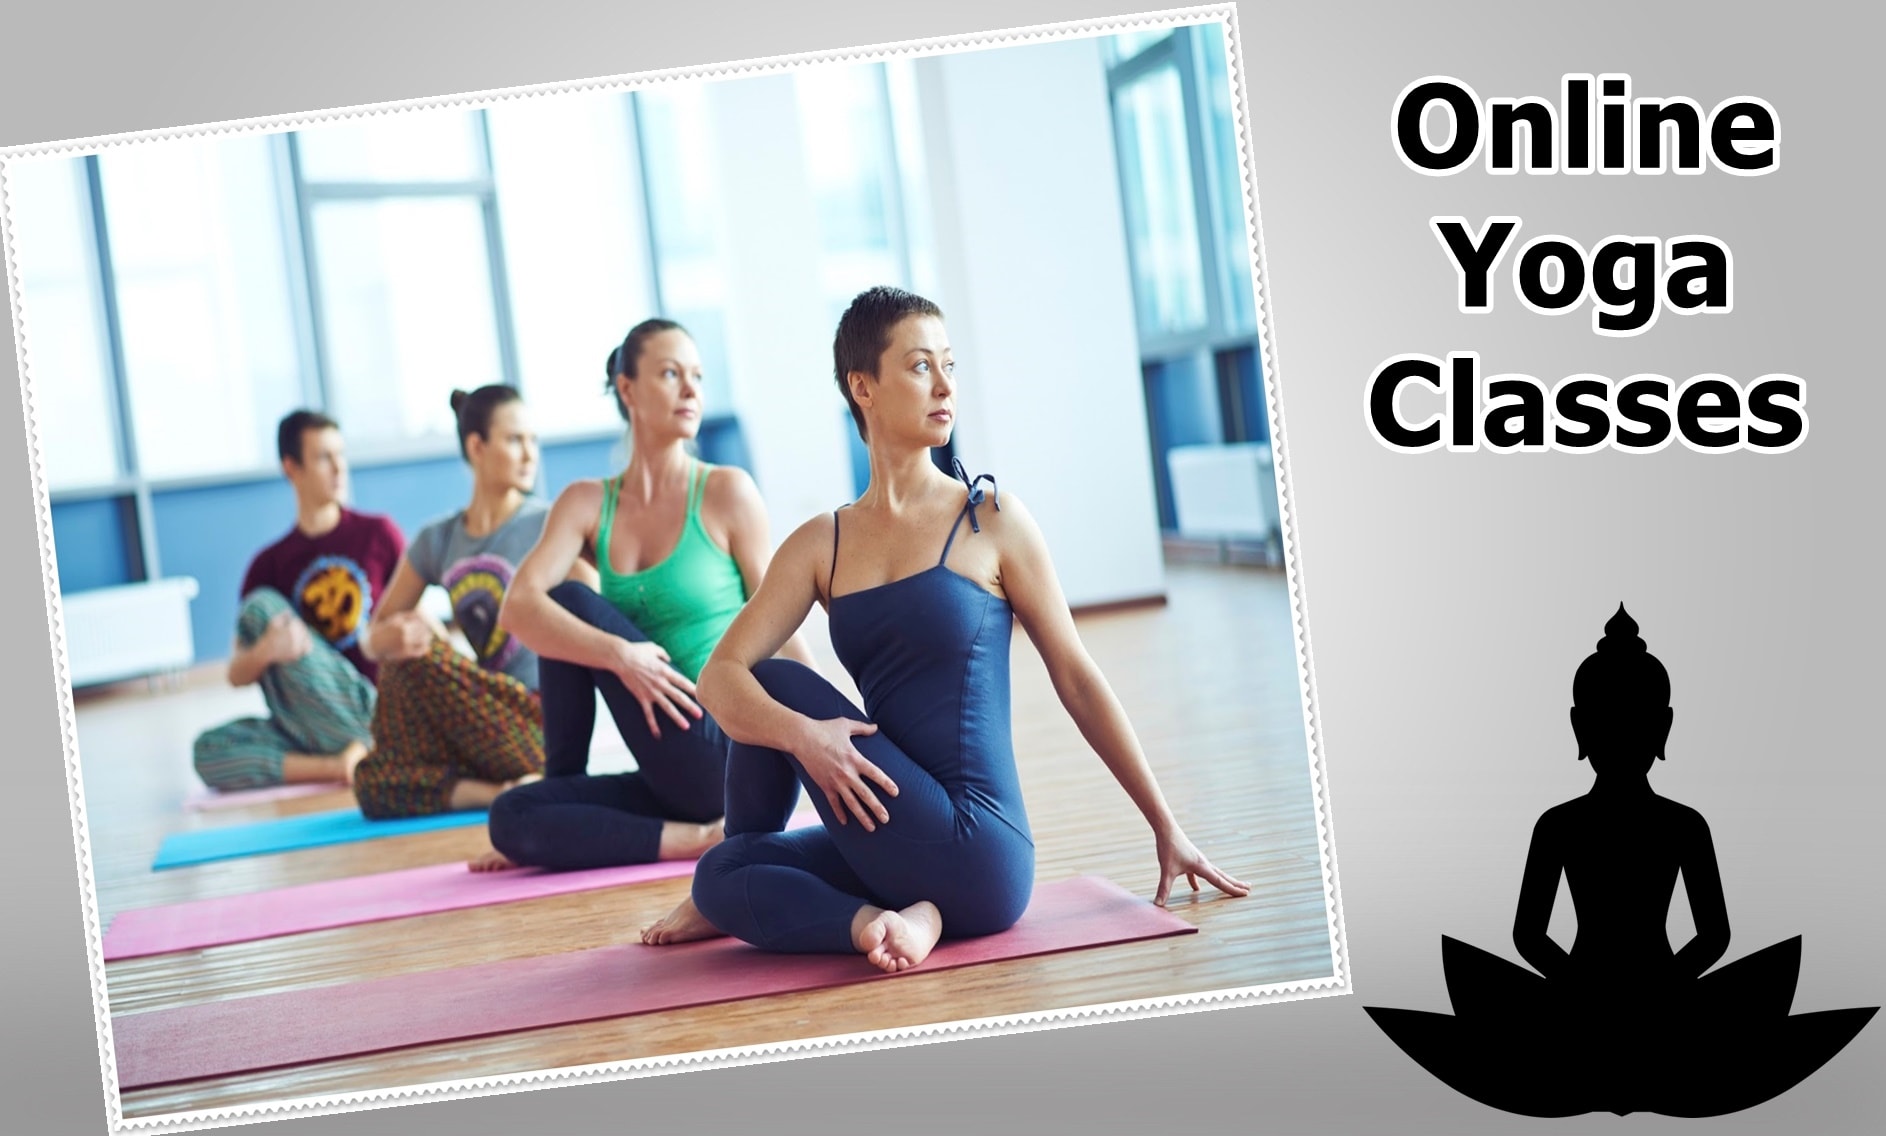 Make An Exercise Night Enjoy Glo's Online Yoga Classes